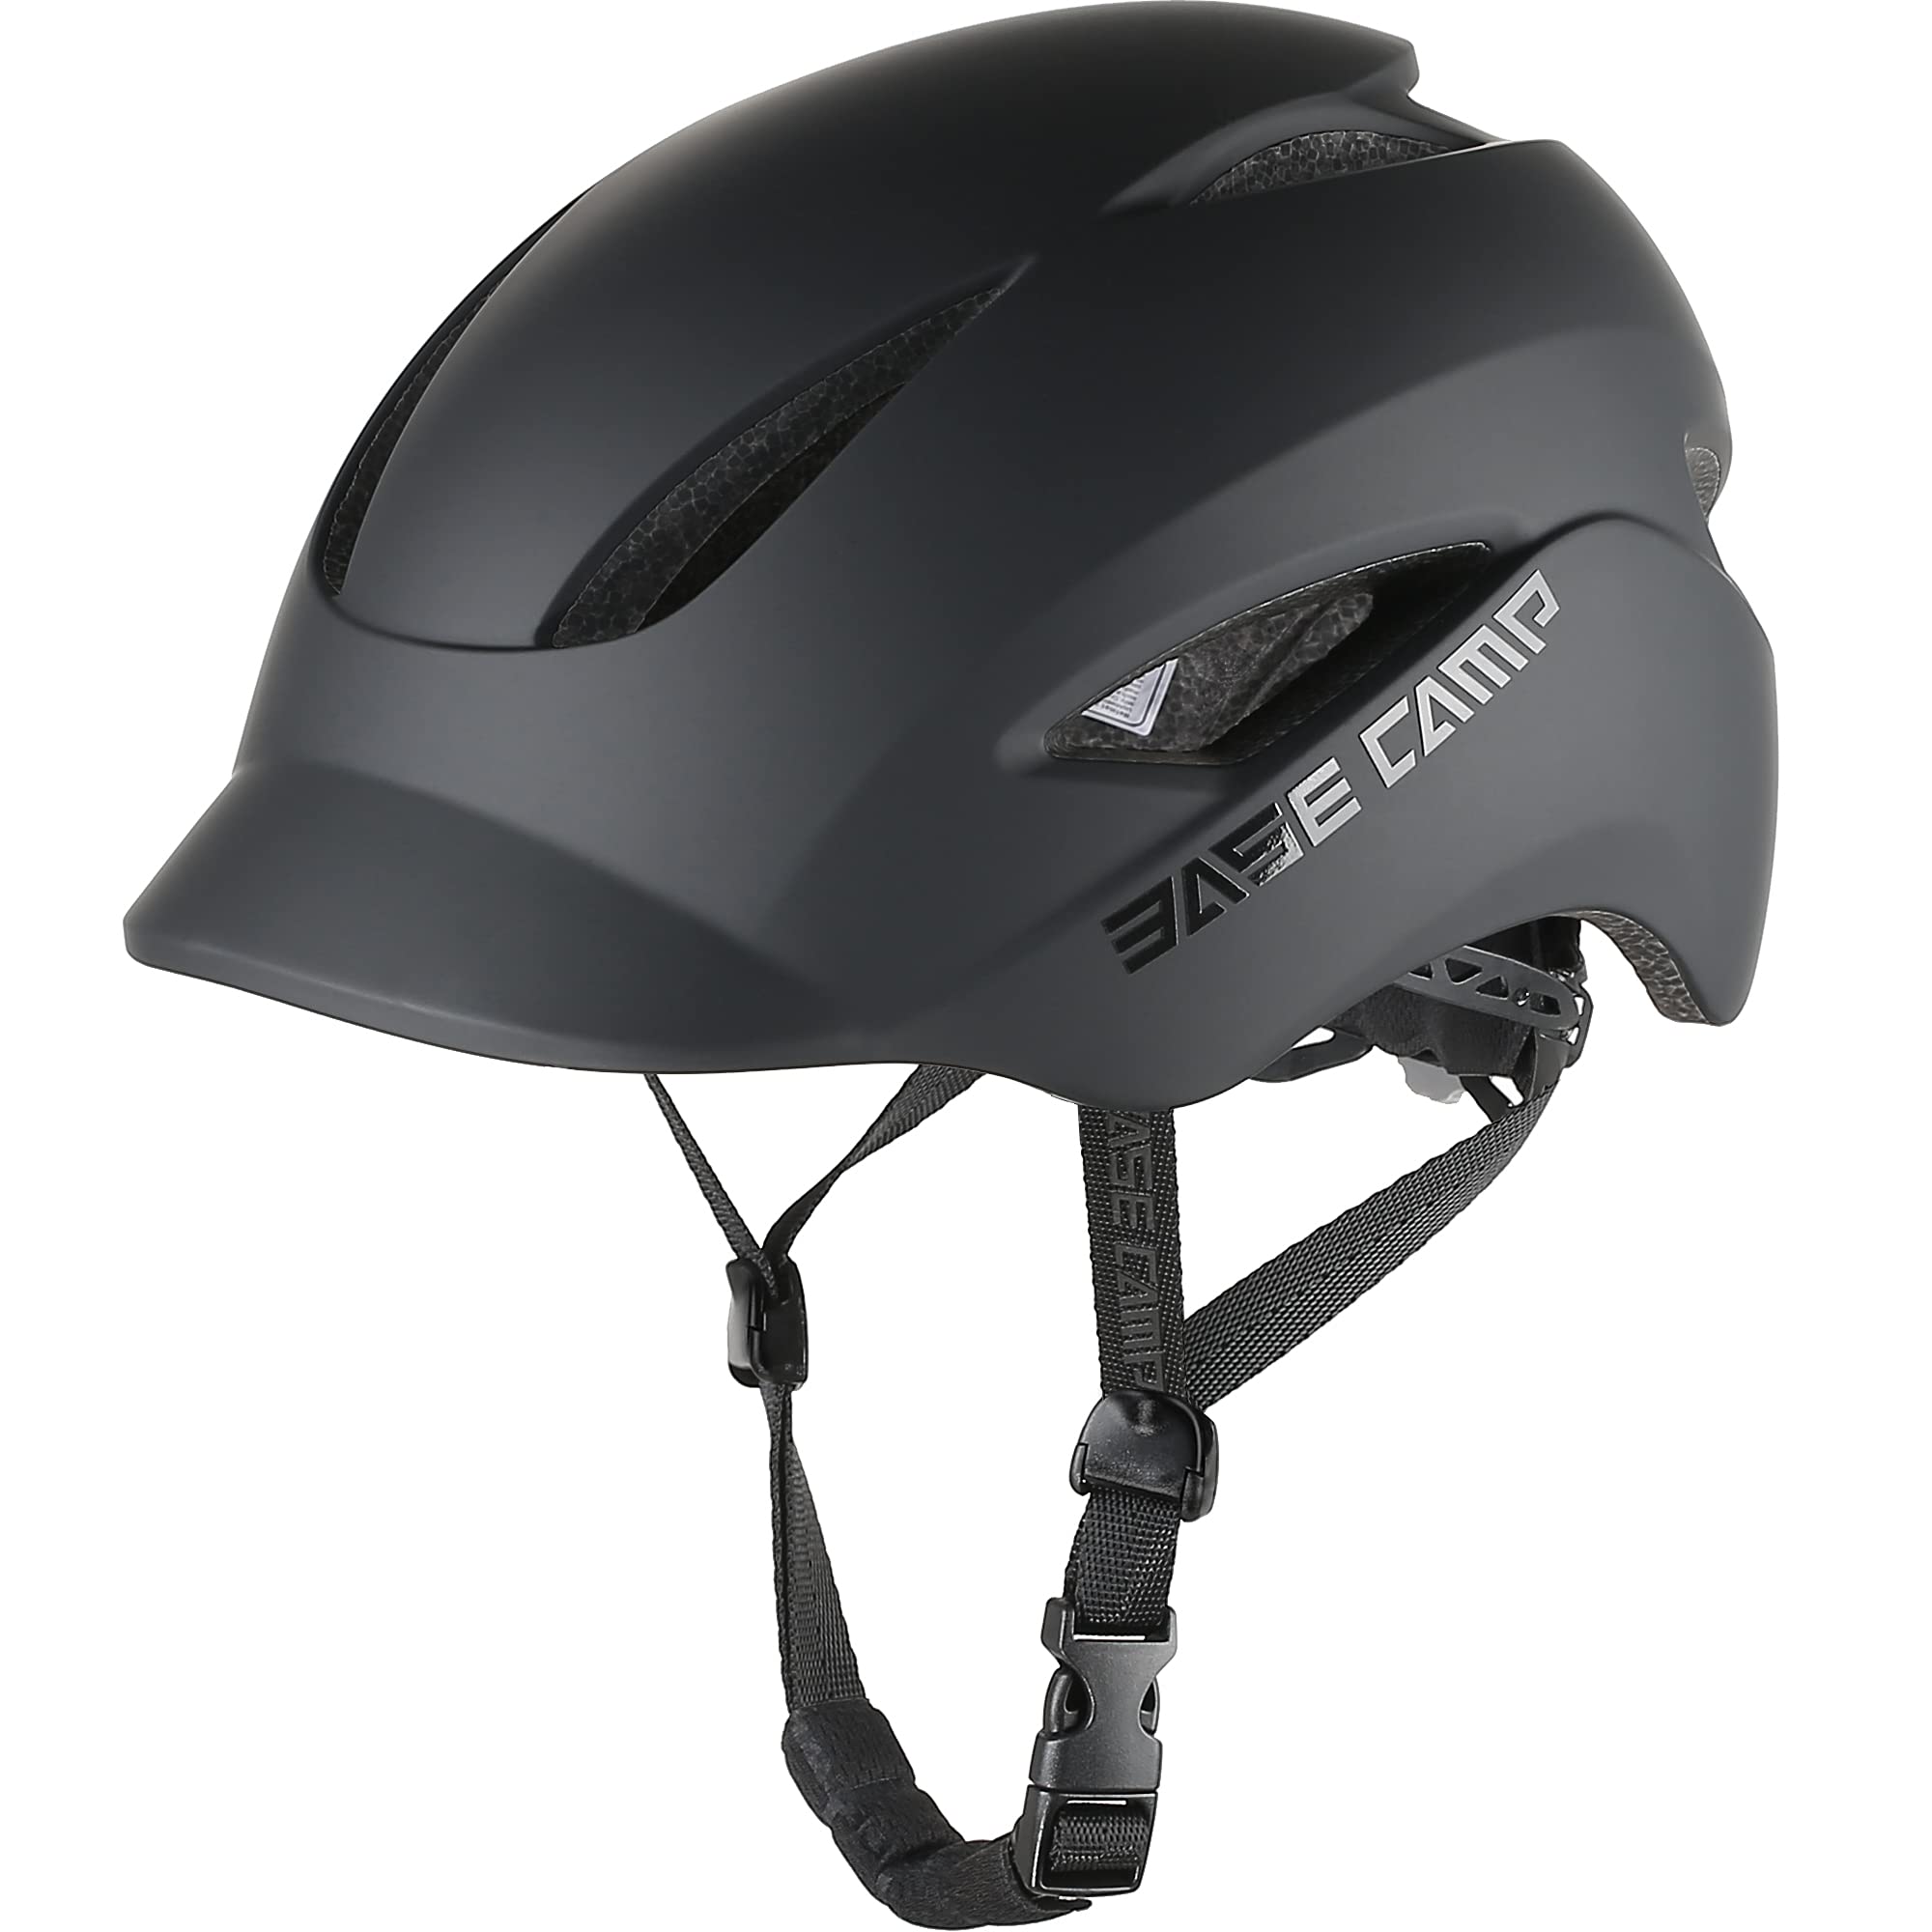 BASE CAMP Bike Helmet Lightweight